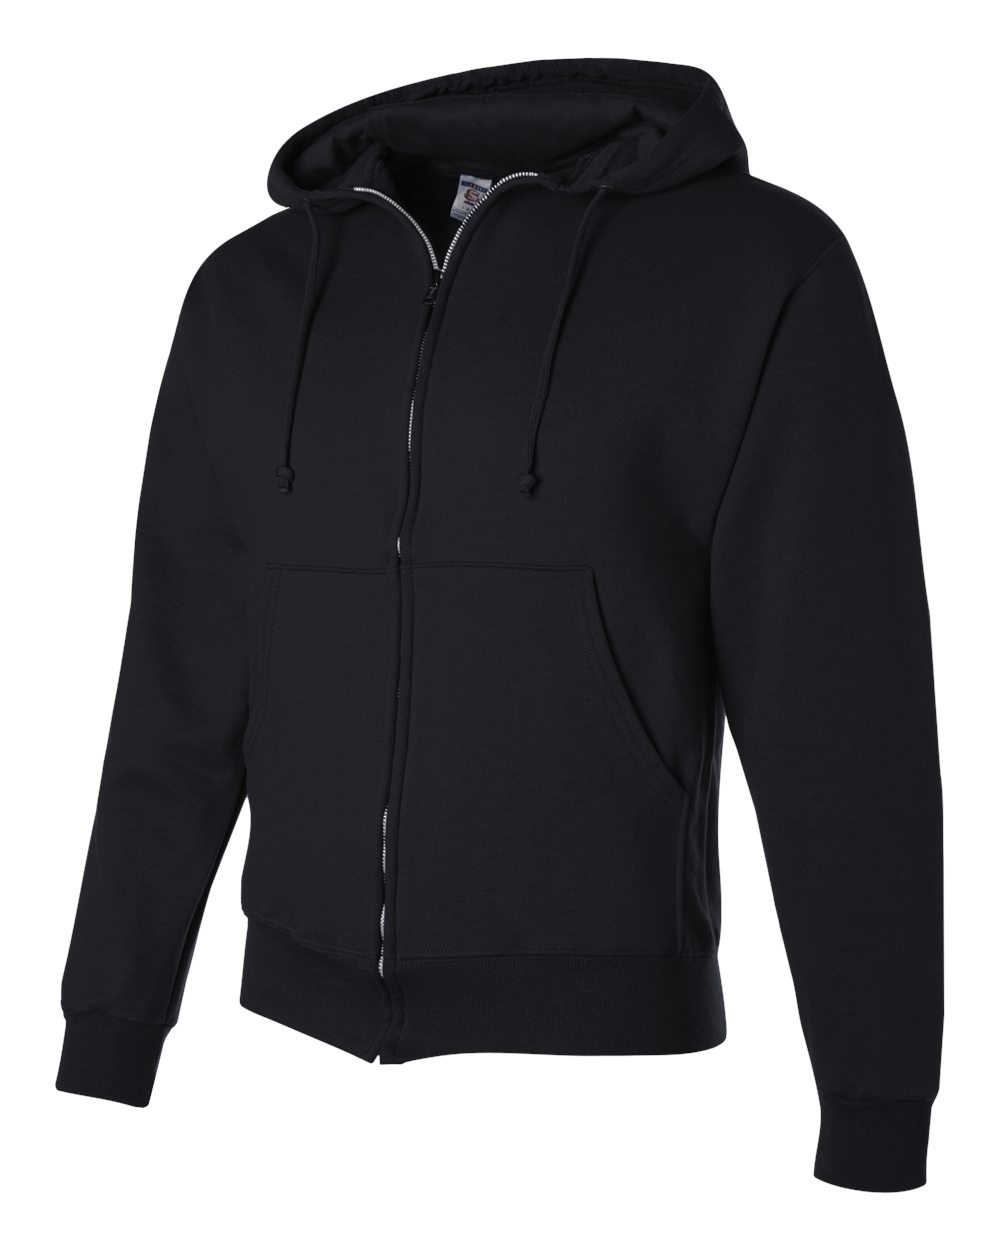 JERZEES 4999MR - NuBlend SUPER SWEATS Full-Zip Hooded Sweatshirt